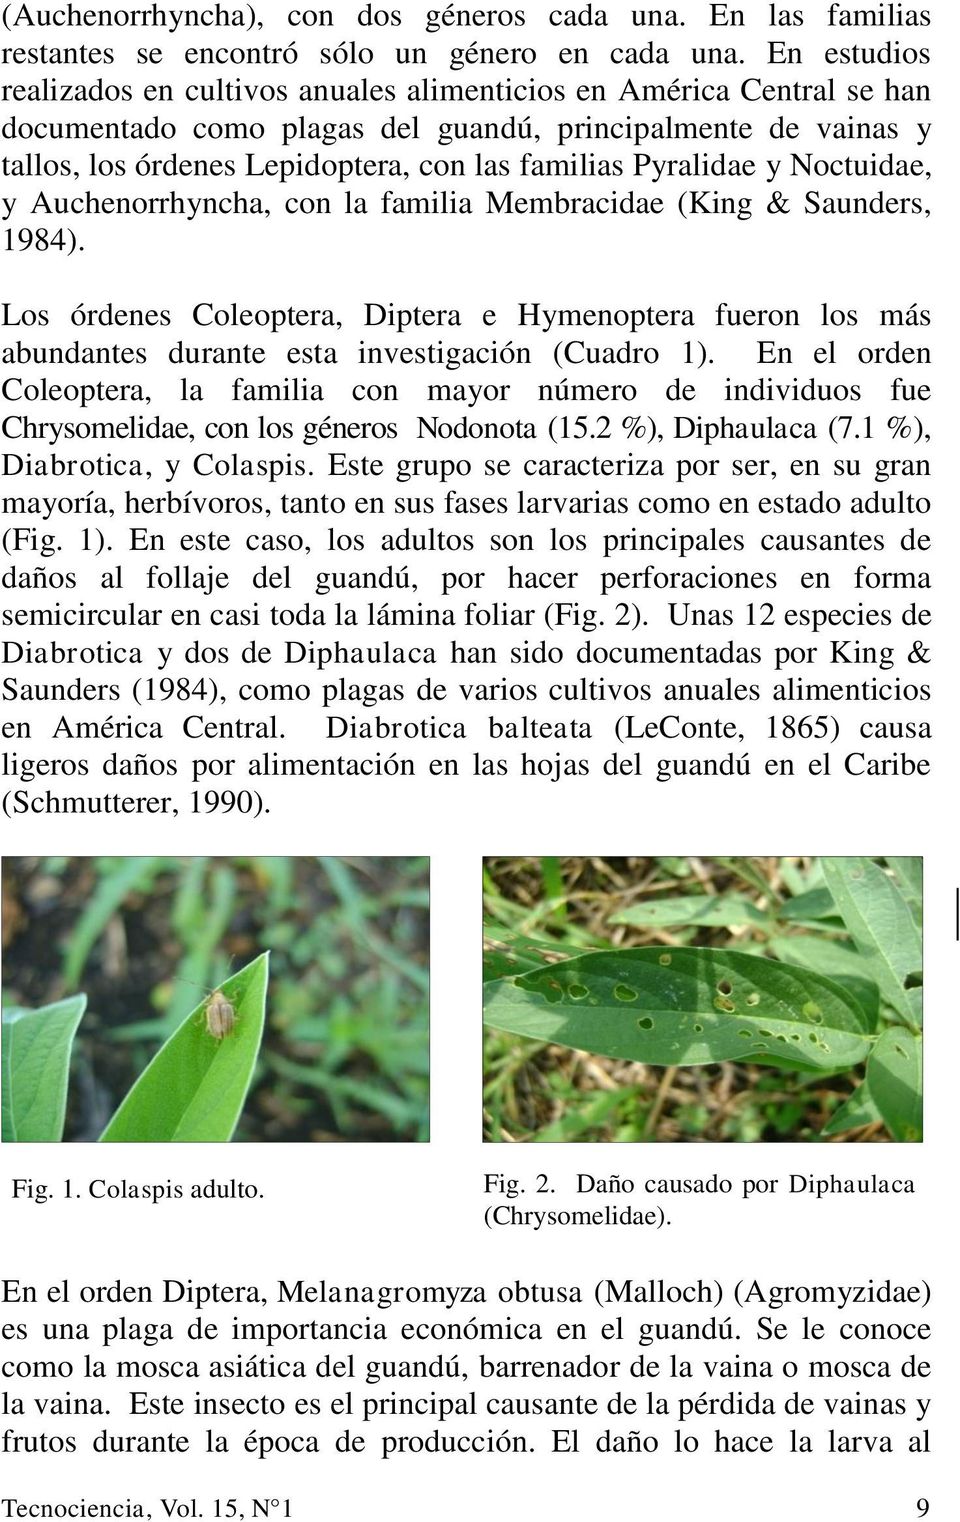 Pyralidae y Noctuidae, y Auchenorrhyncha, con la familia Membracidae (King & Saunders, 1984).